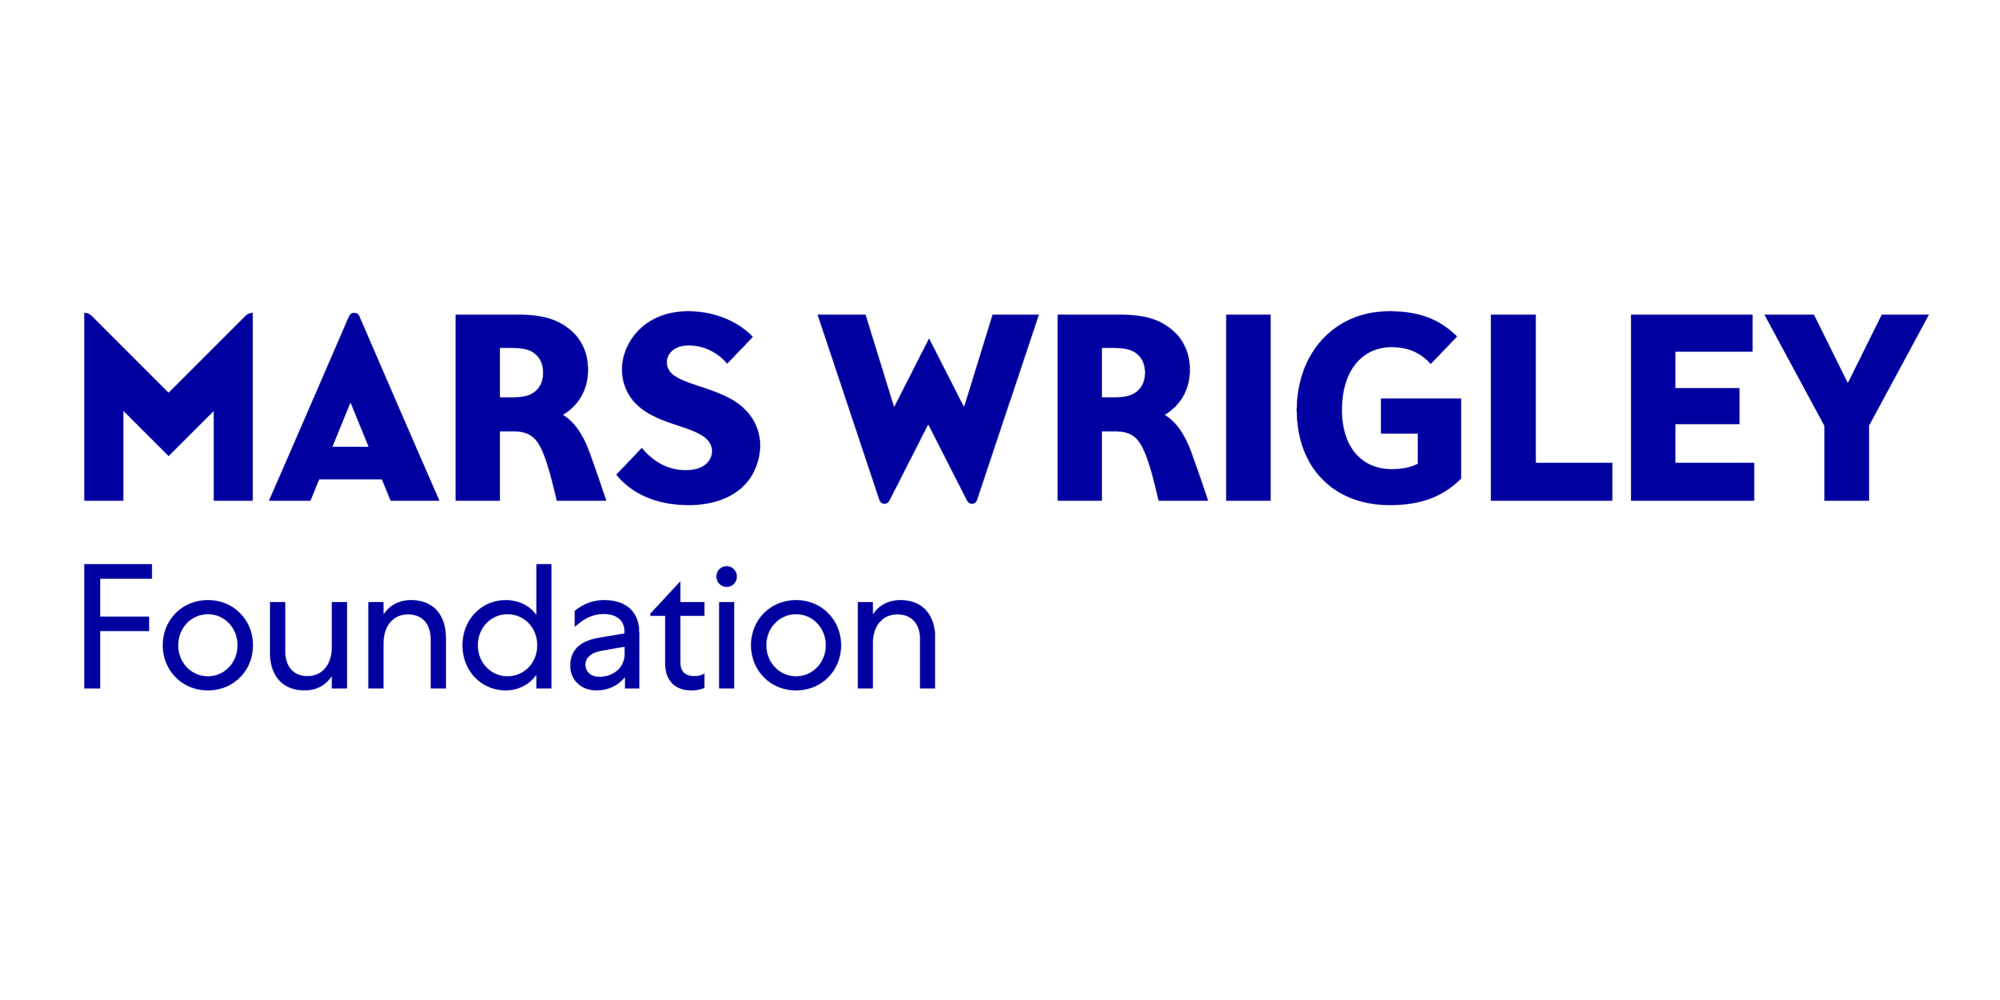 Mars Wrigley Foundation Logo